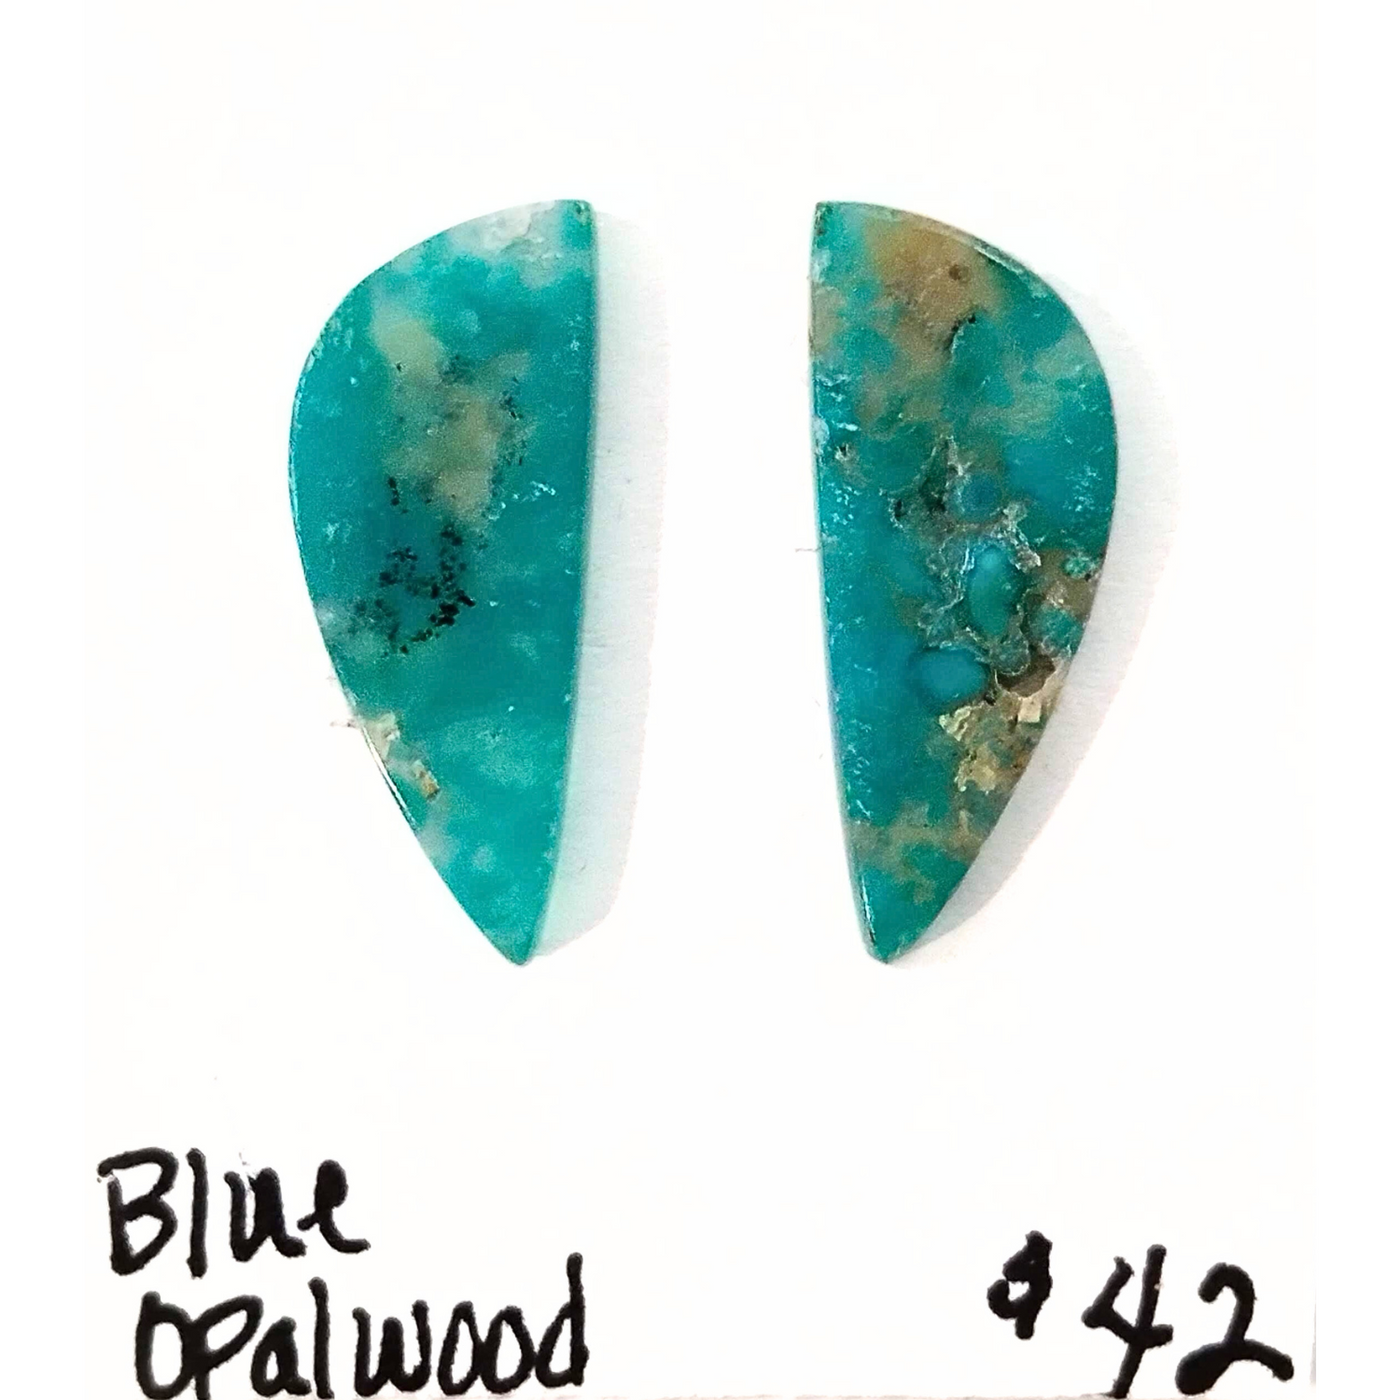 BOW-1002 Blue Opal Wood Cabochon Pair